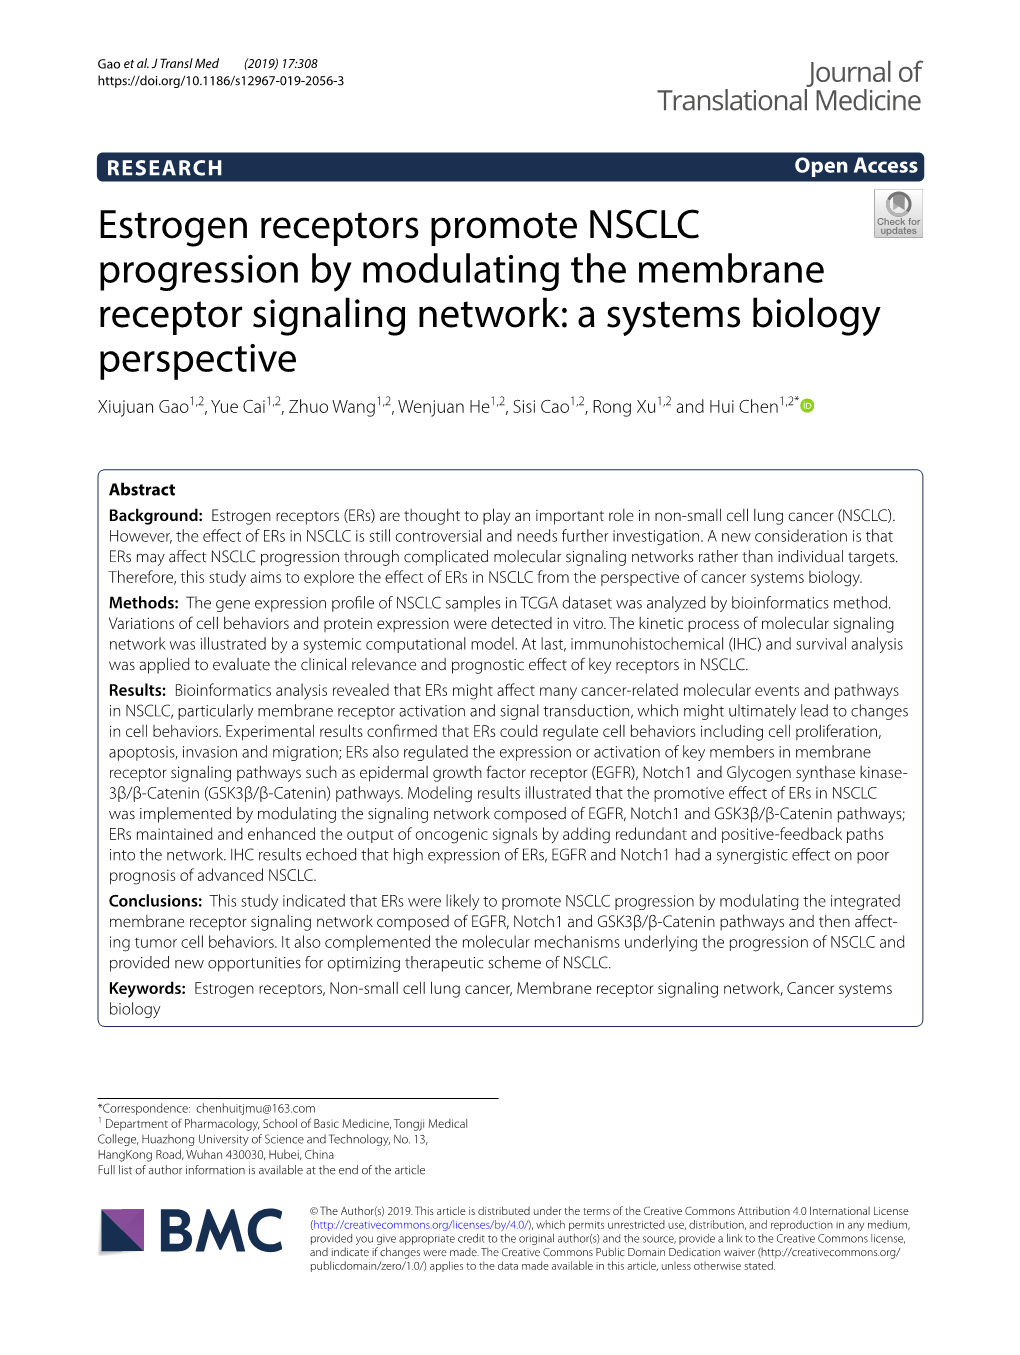 Estrogen Receptors Promote NSCLC Progression by Modulating The